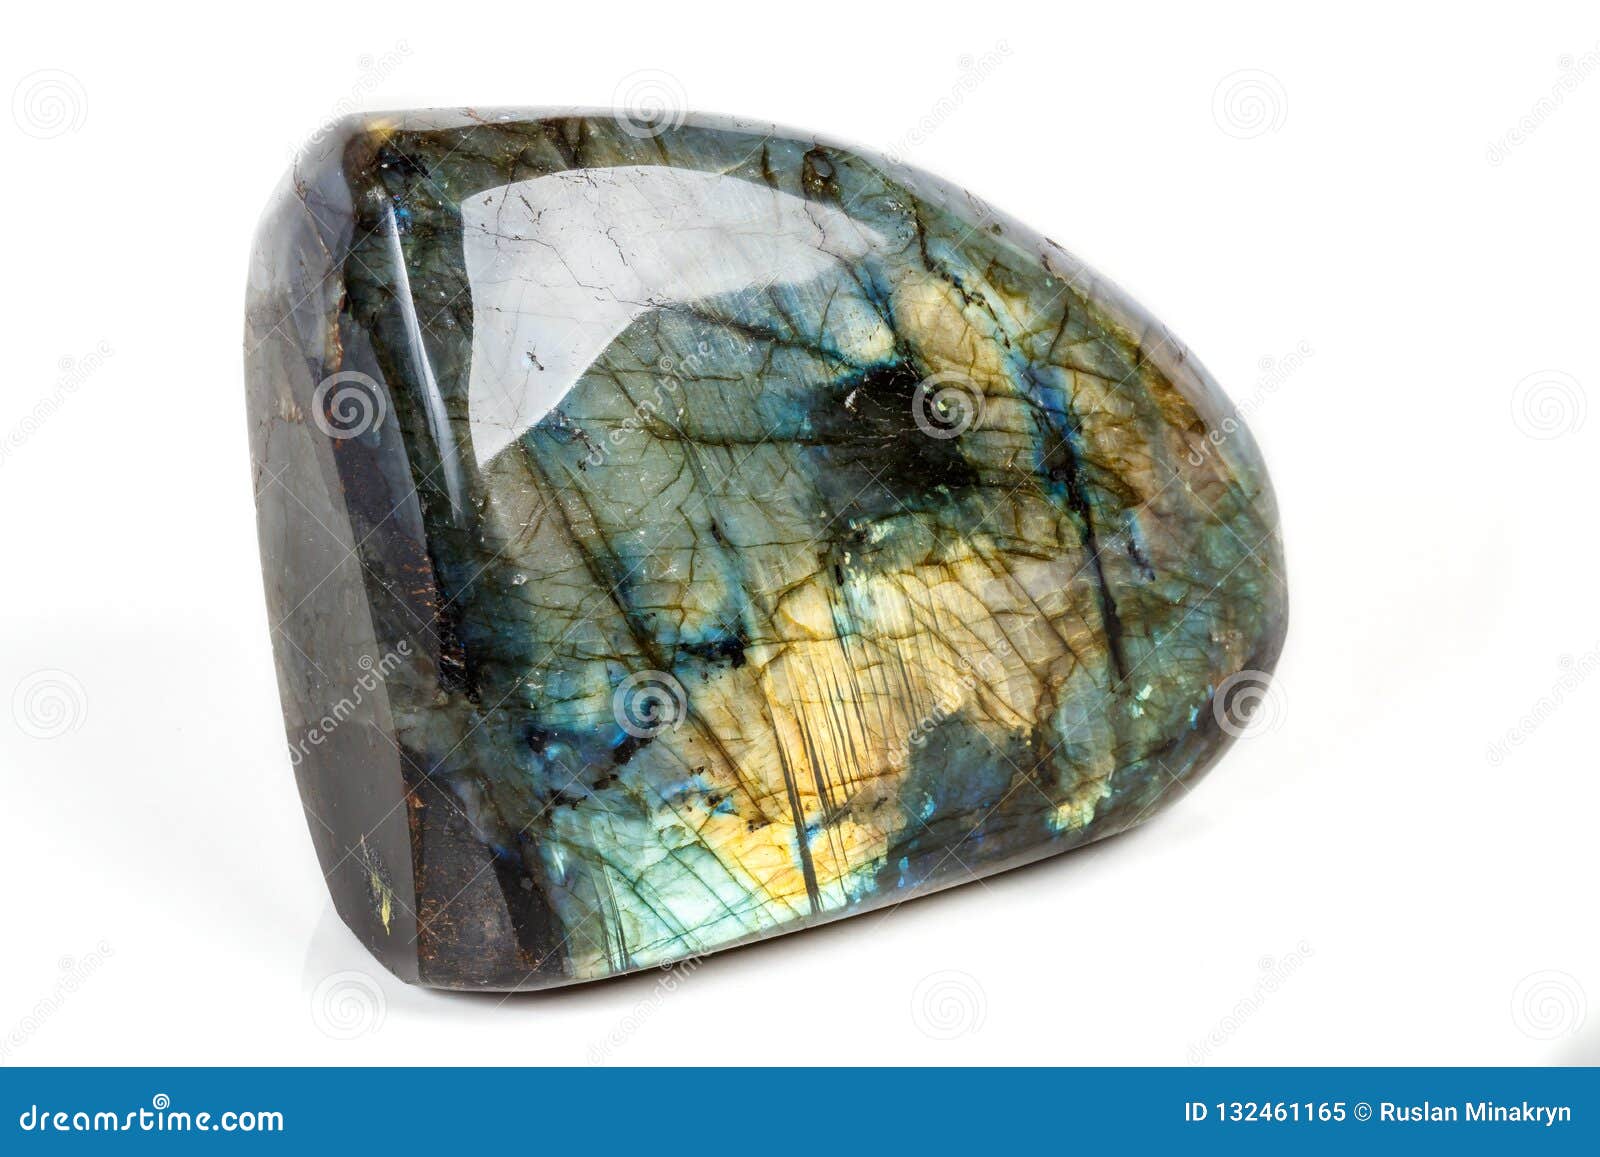 Macro Labradorite Mineral Stone on White Background Stock Image - Image ...